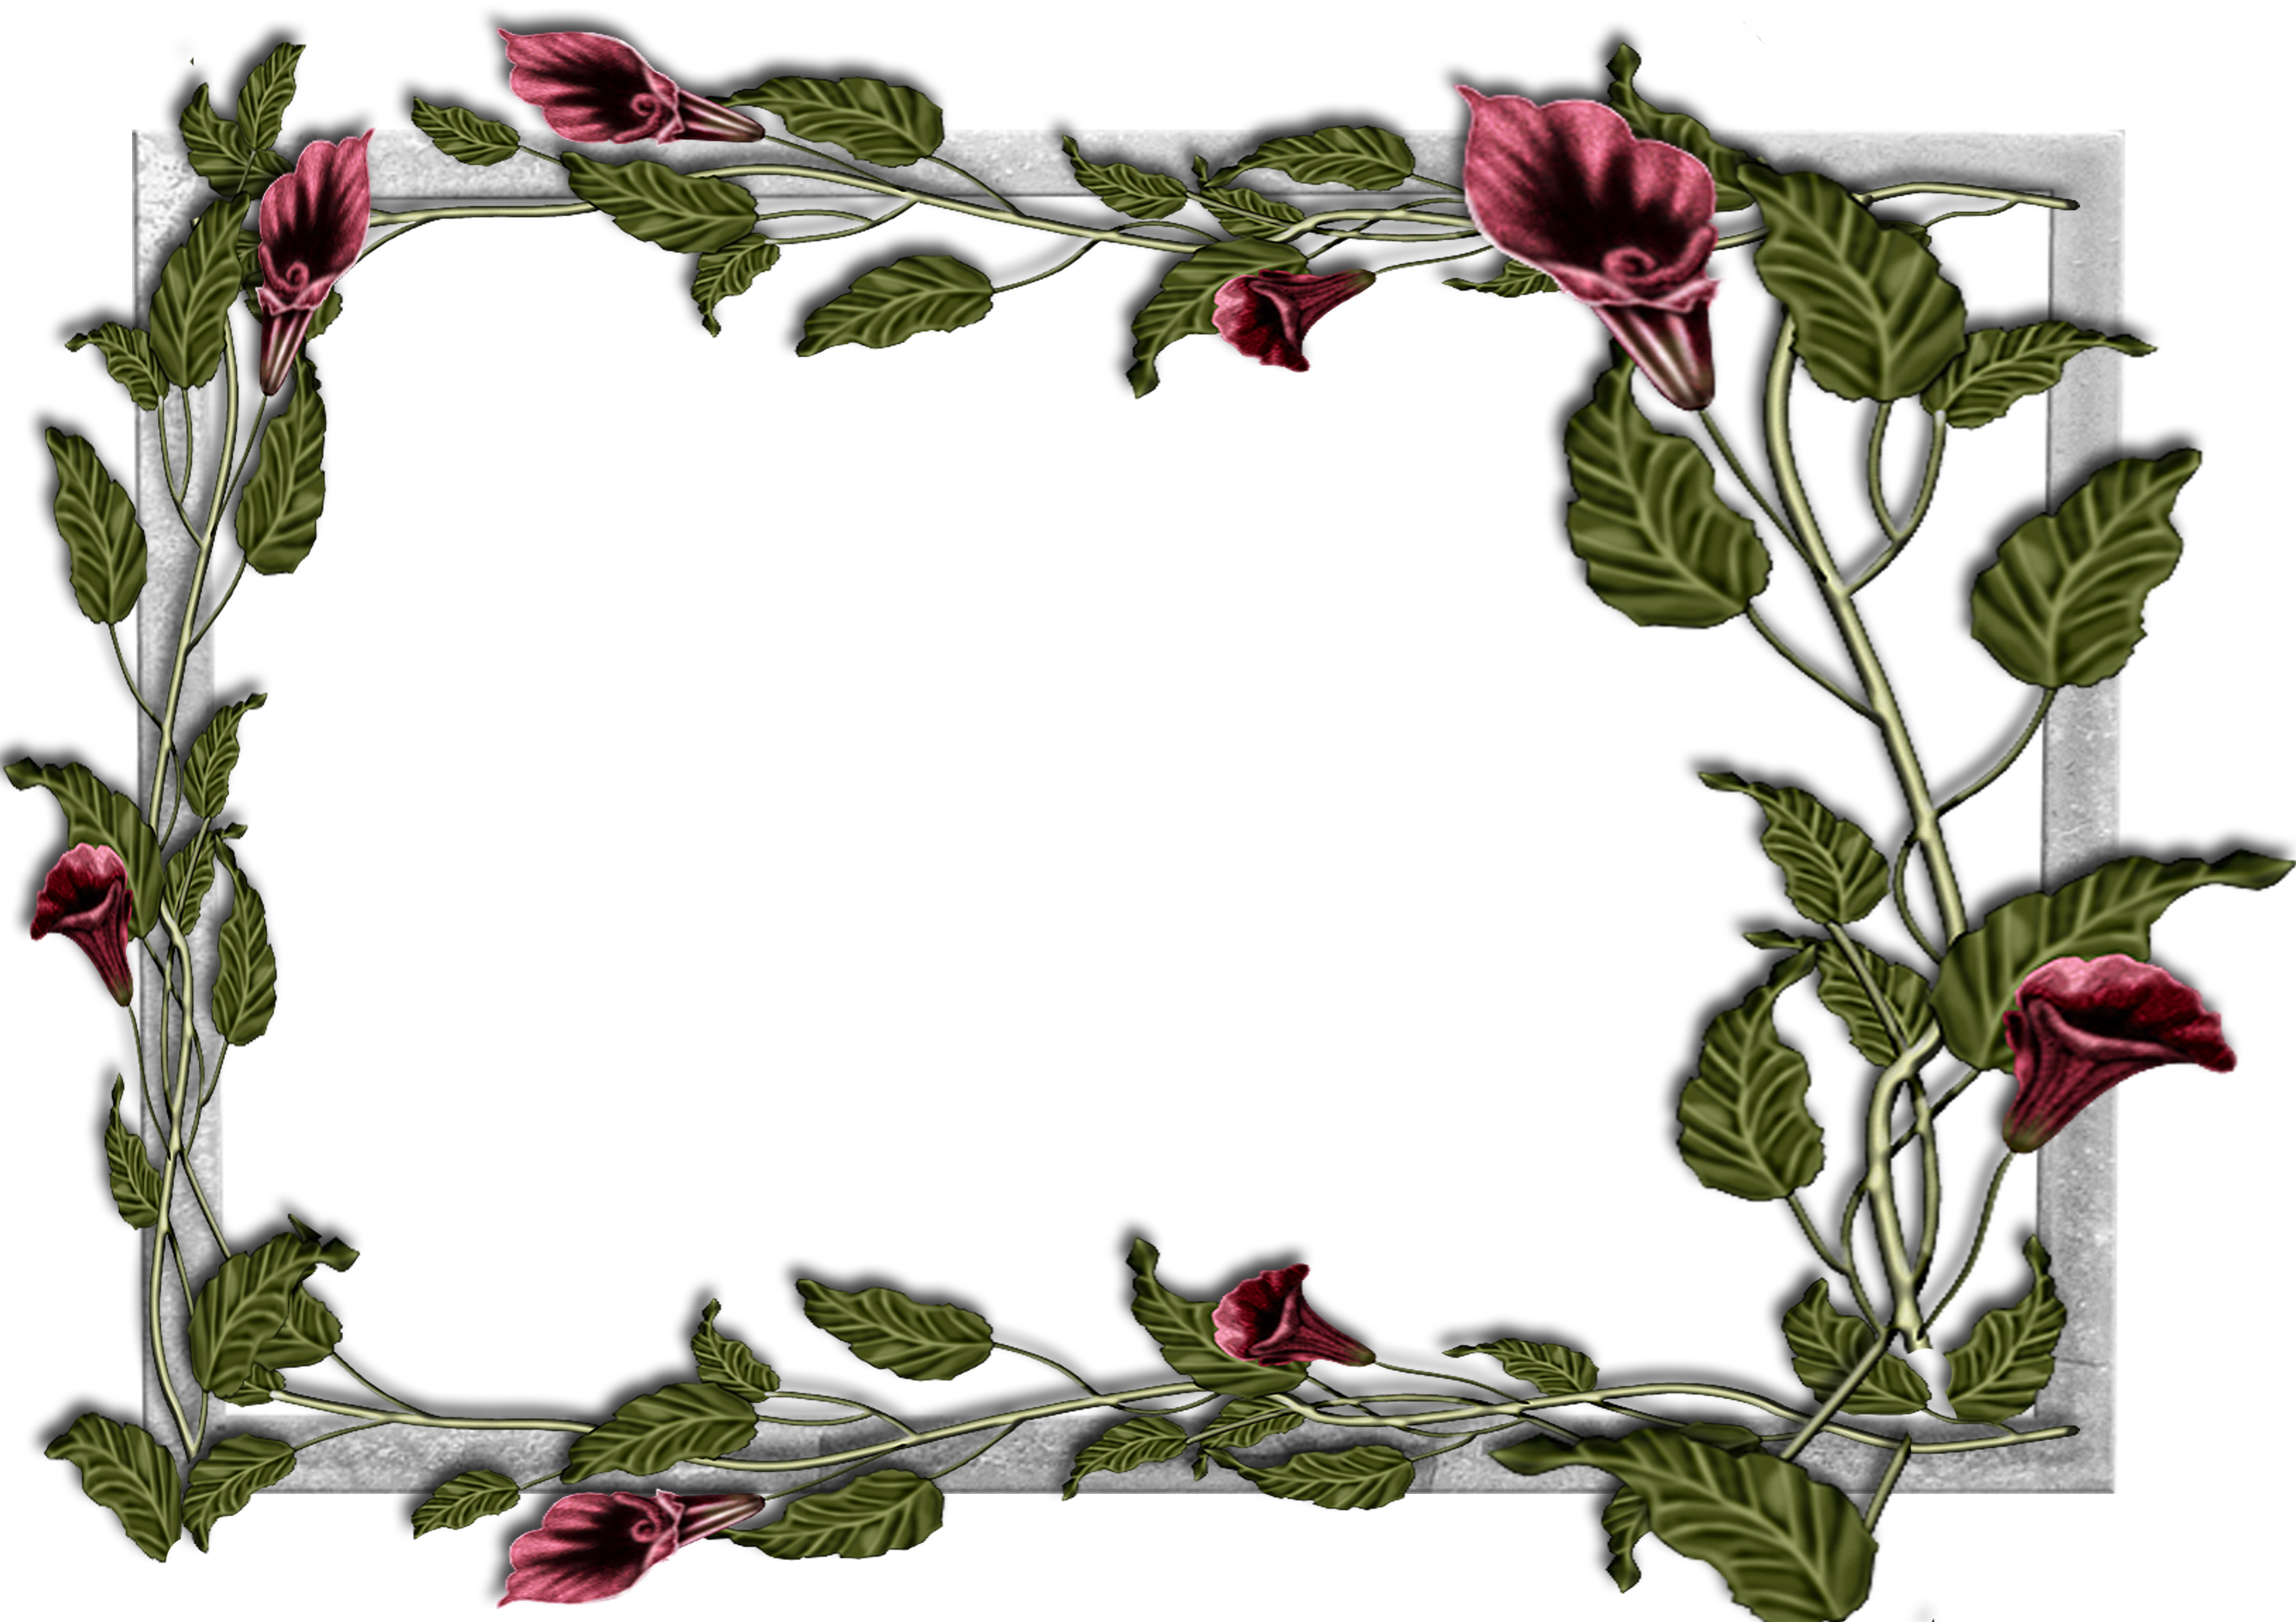 Flowers frame (14)